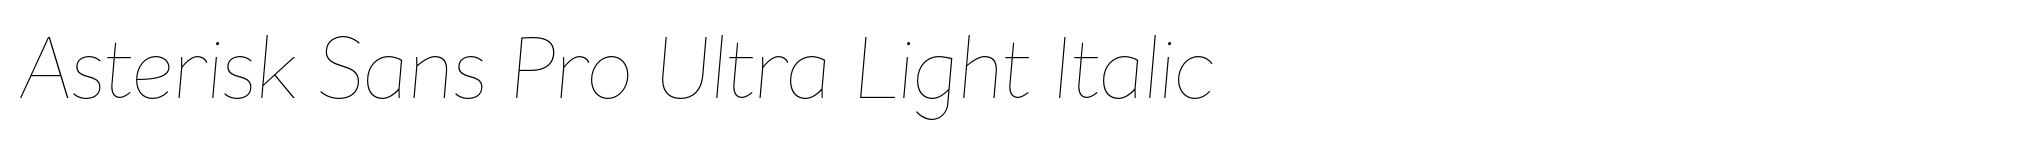 Asterisk Sans Pro Ultra Light Italic image